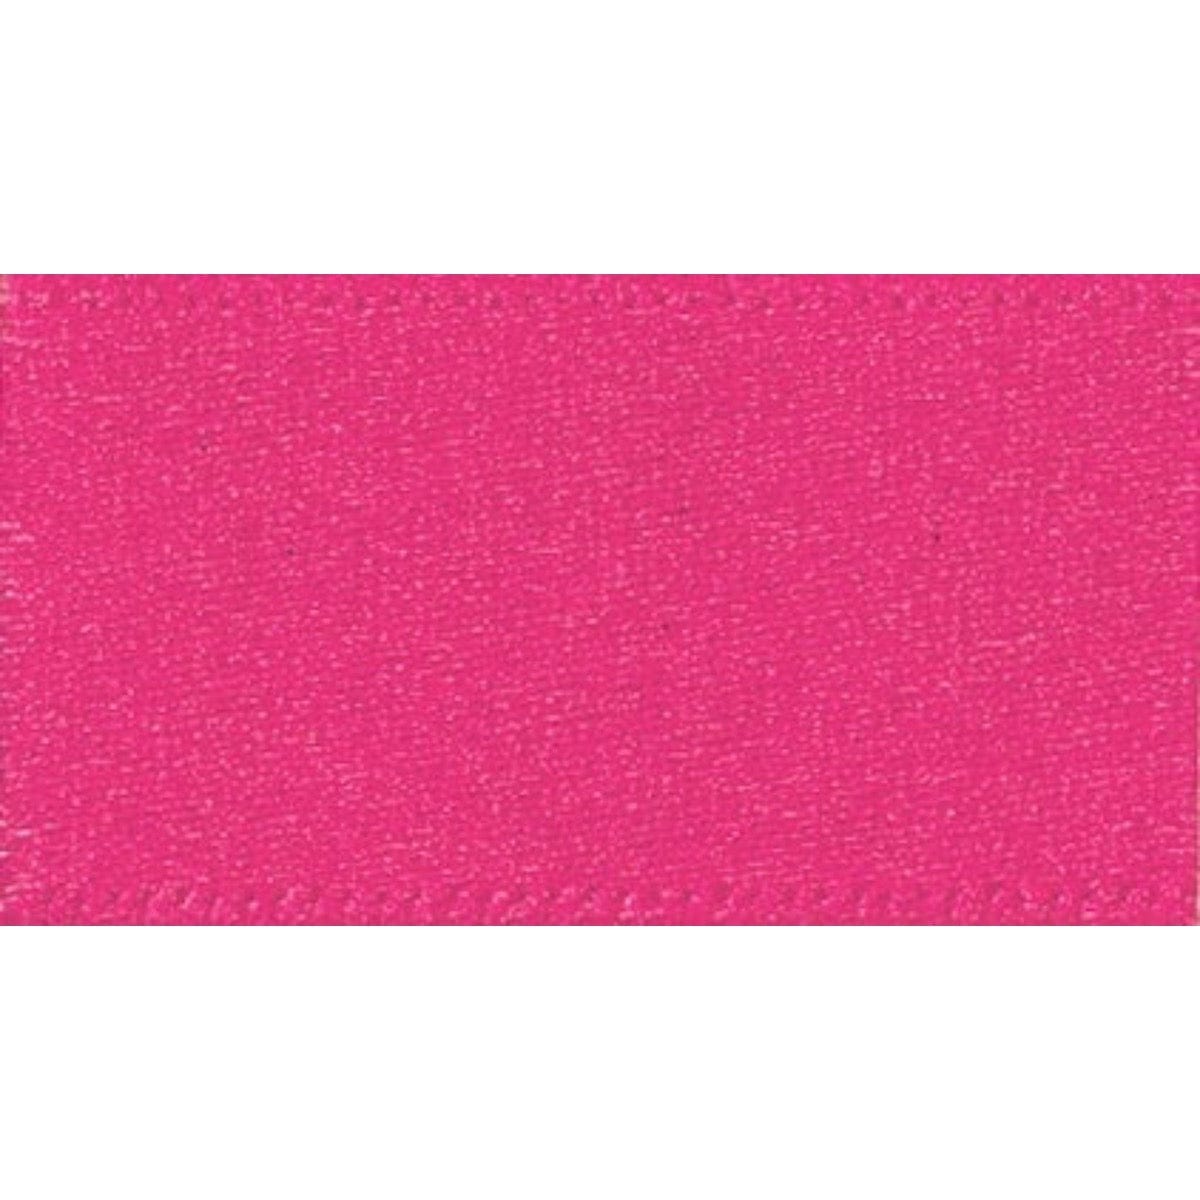 Double Faced Satin Ribbon Shocking Pink: 35mm wide. Price per metre.